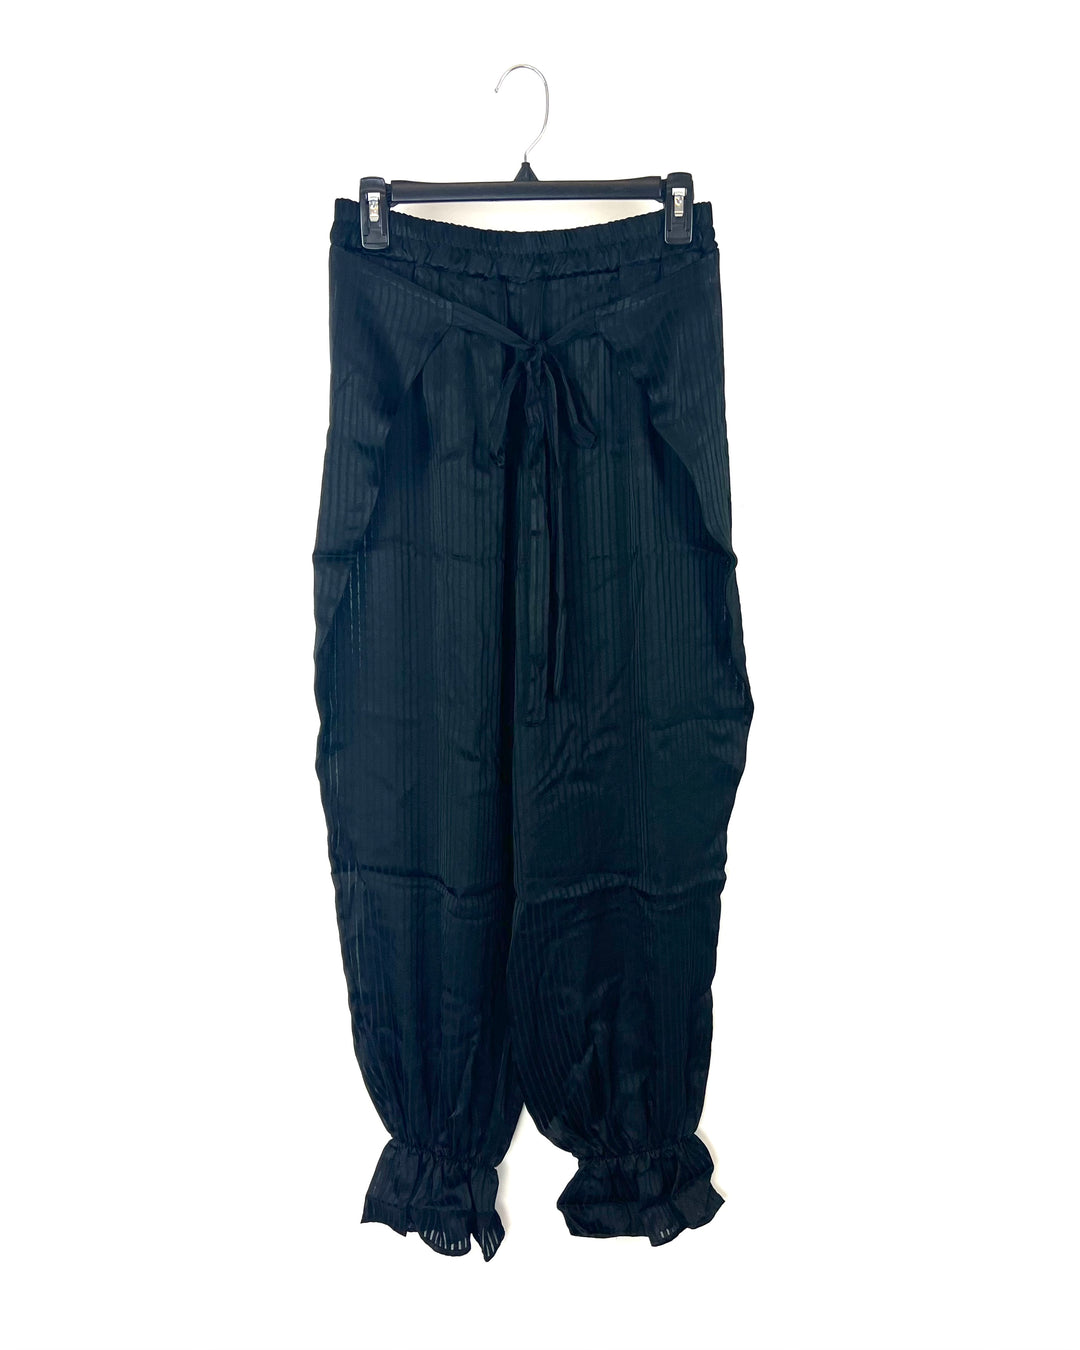 Black Striped Sheer Pants - Size 0-8